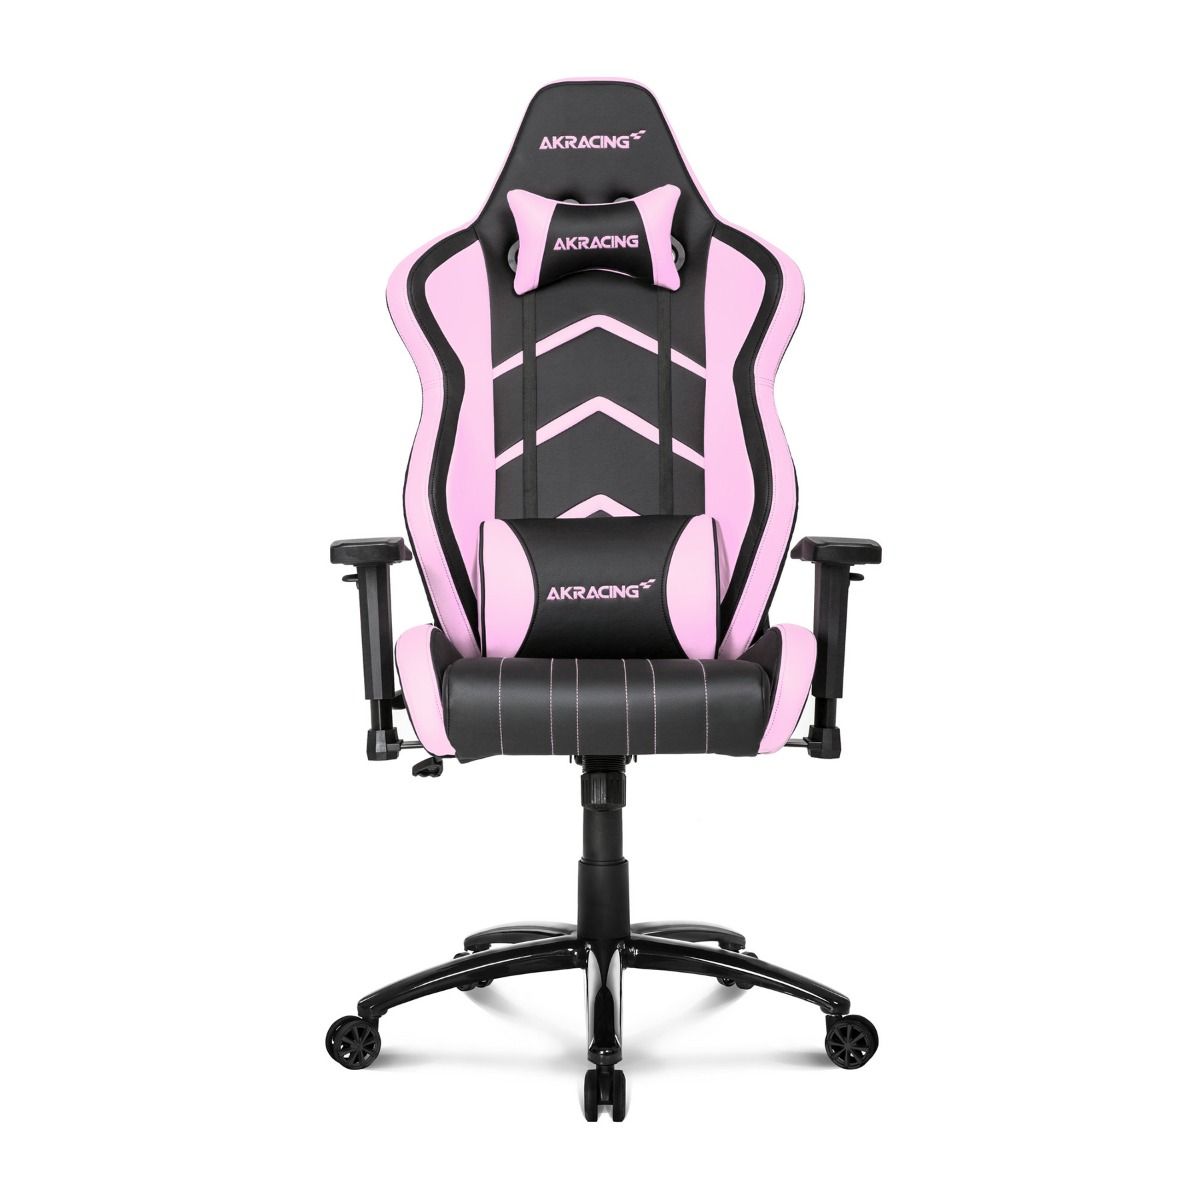 AKRACING Player Gaming Chair Pink